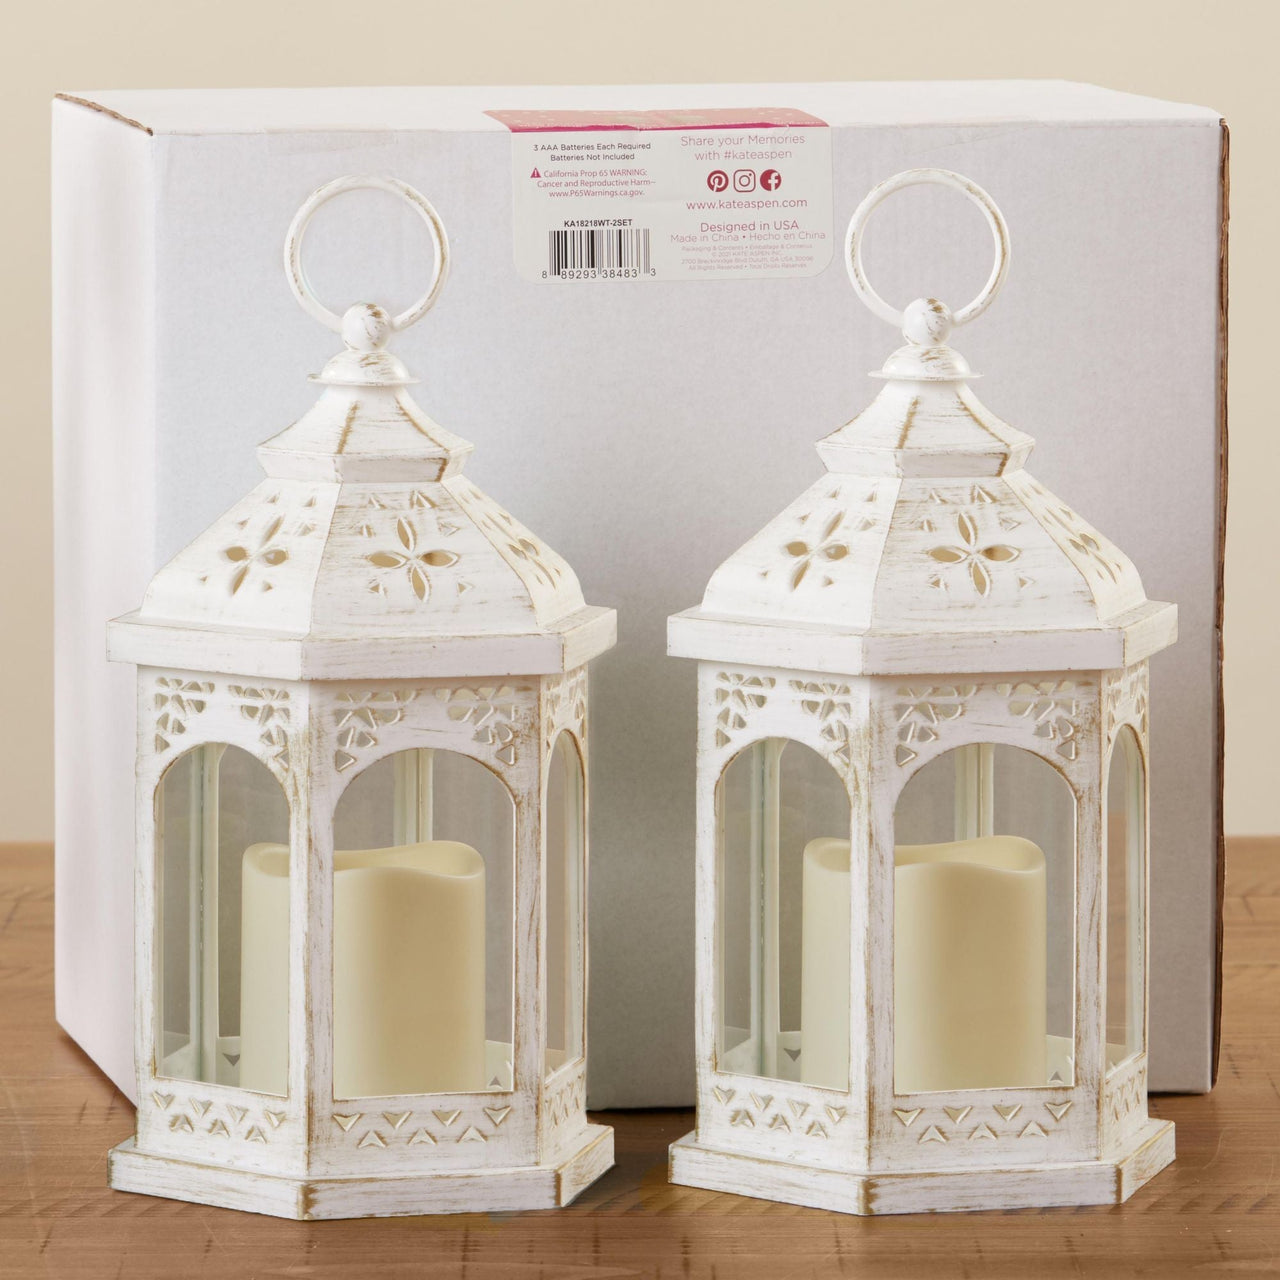 Sachets lanternes bougies - Just Married 11,5x19x7cm